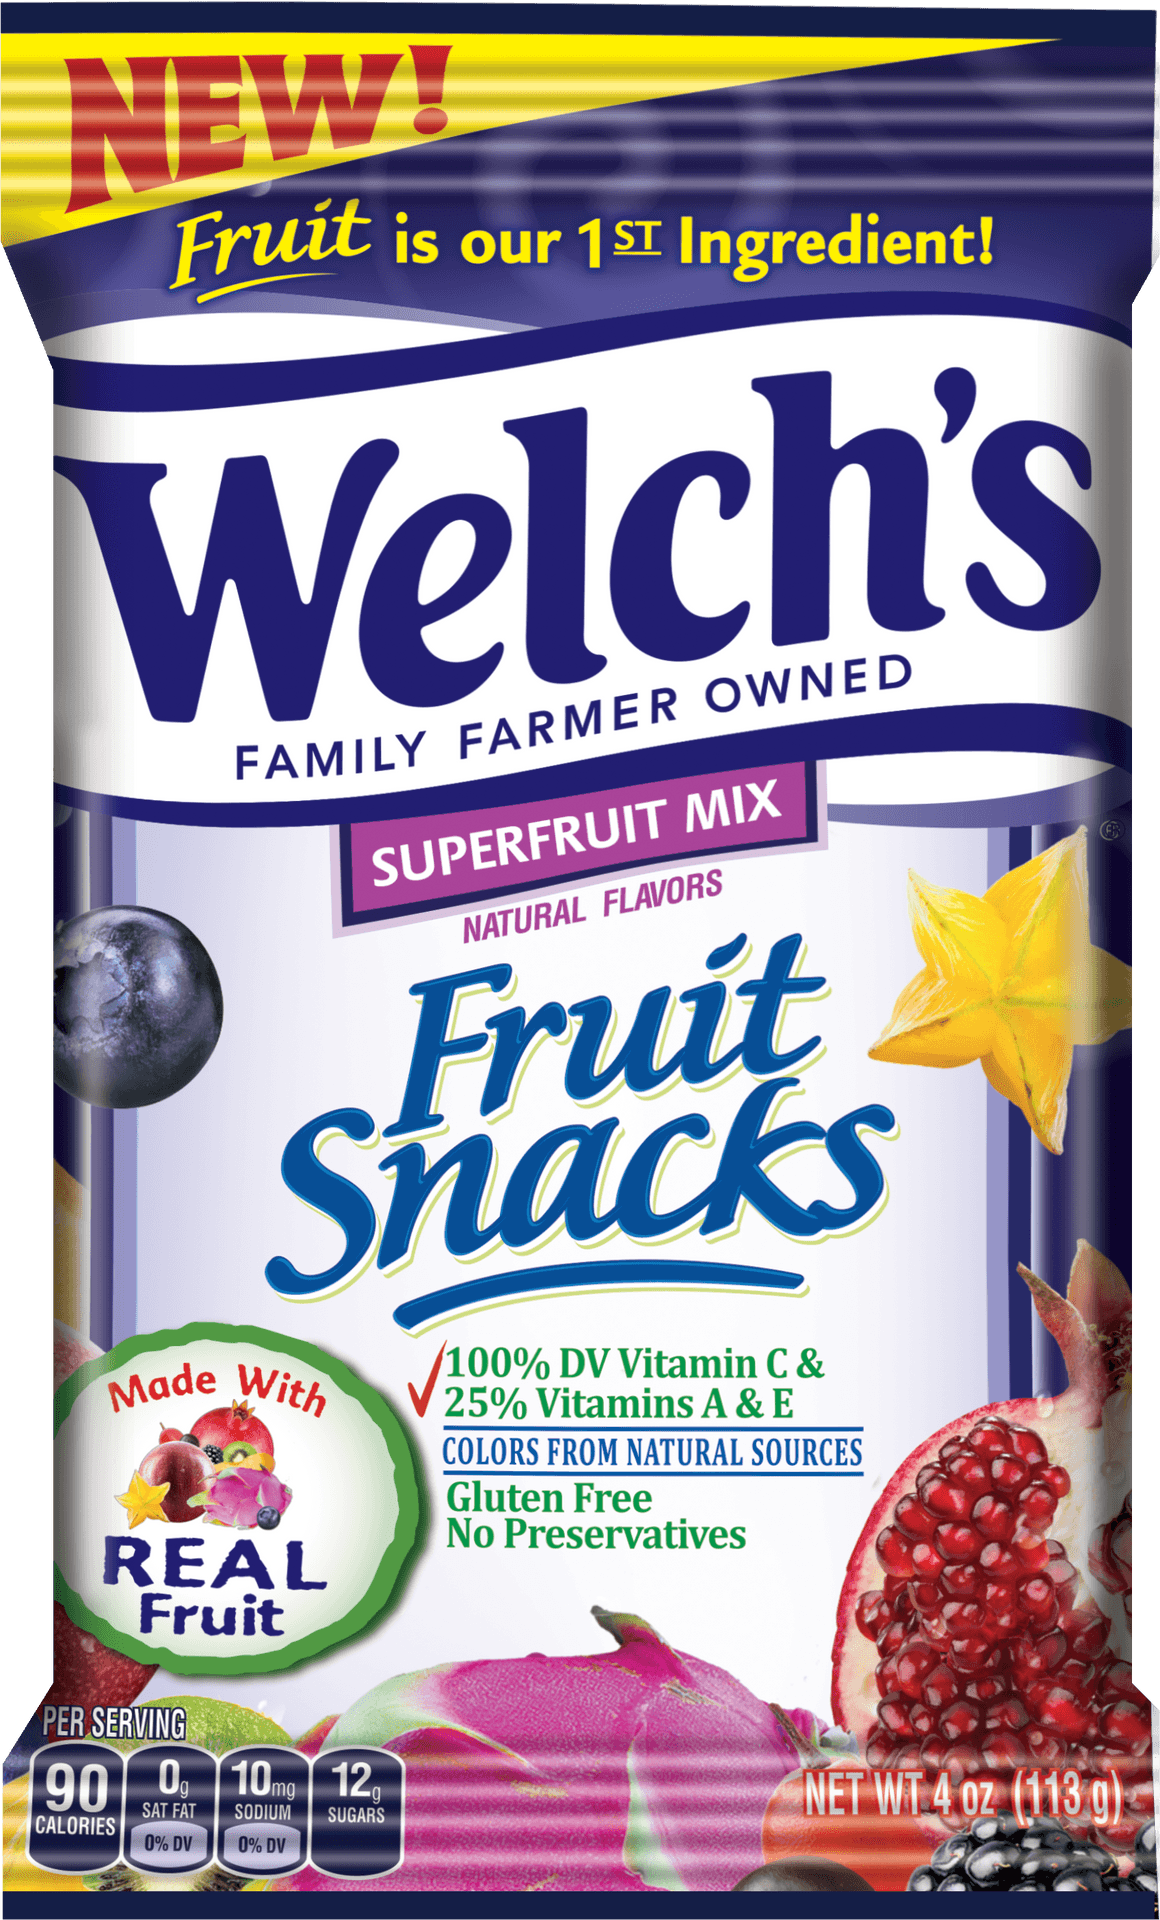 Welchs Superfruit Mix Fruit Snacks Package PNG